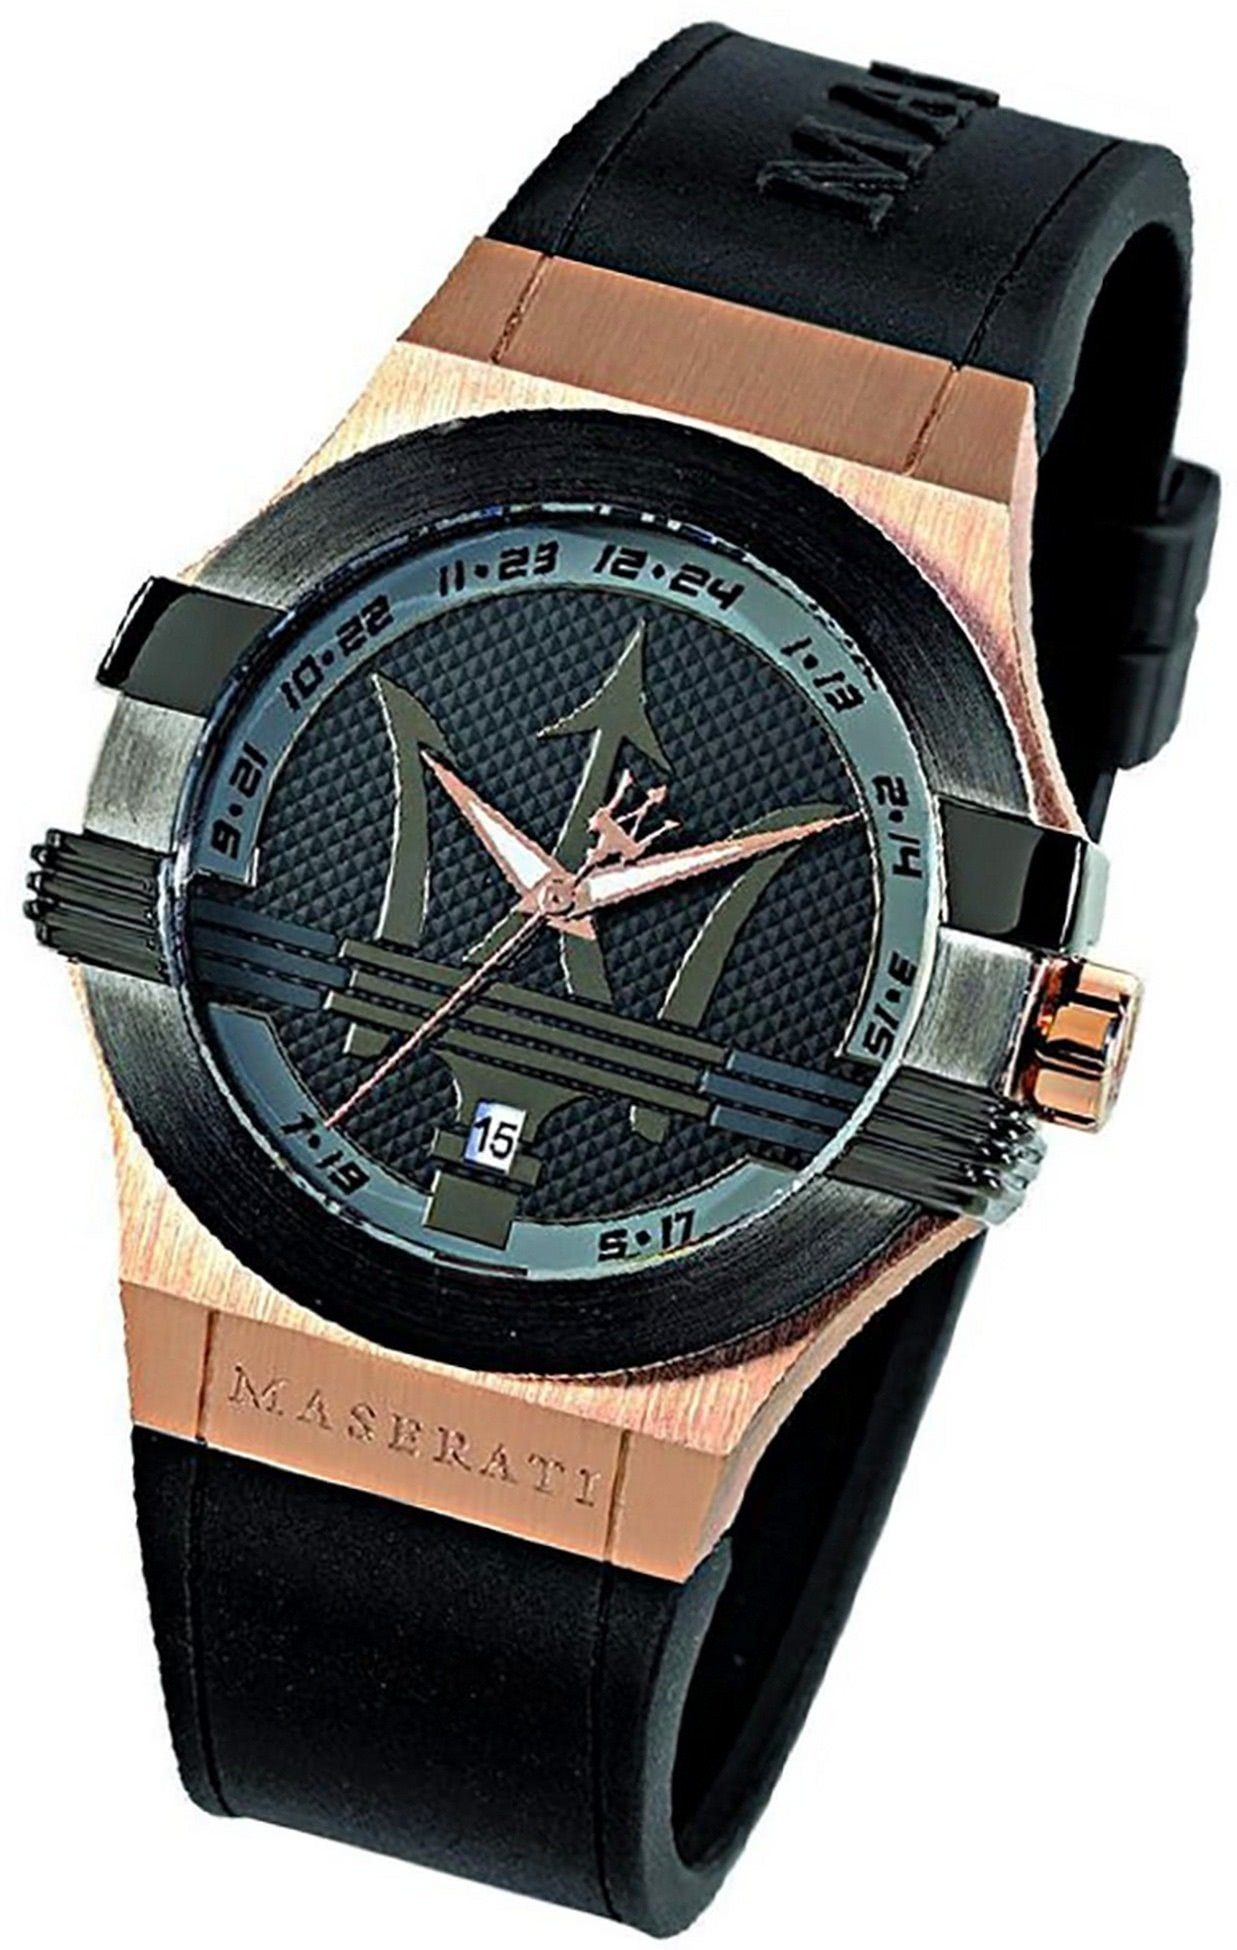 groß MASERATI Quarzuhr schwarz 52x40mm) rundes Silikonarmband, Silikon Armband-Uhr, Herrenuhr Maserati (ca. Gehäuse,